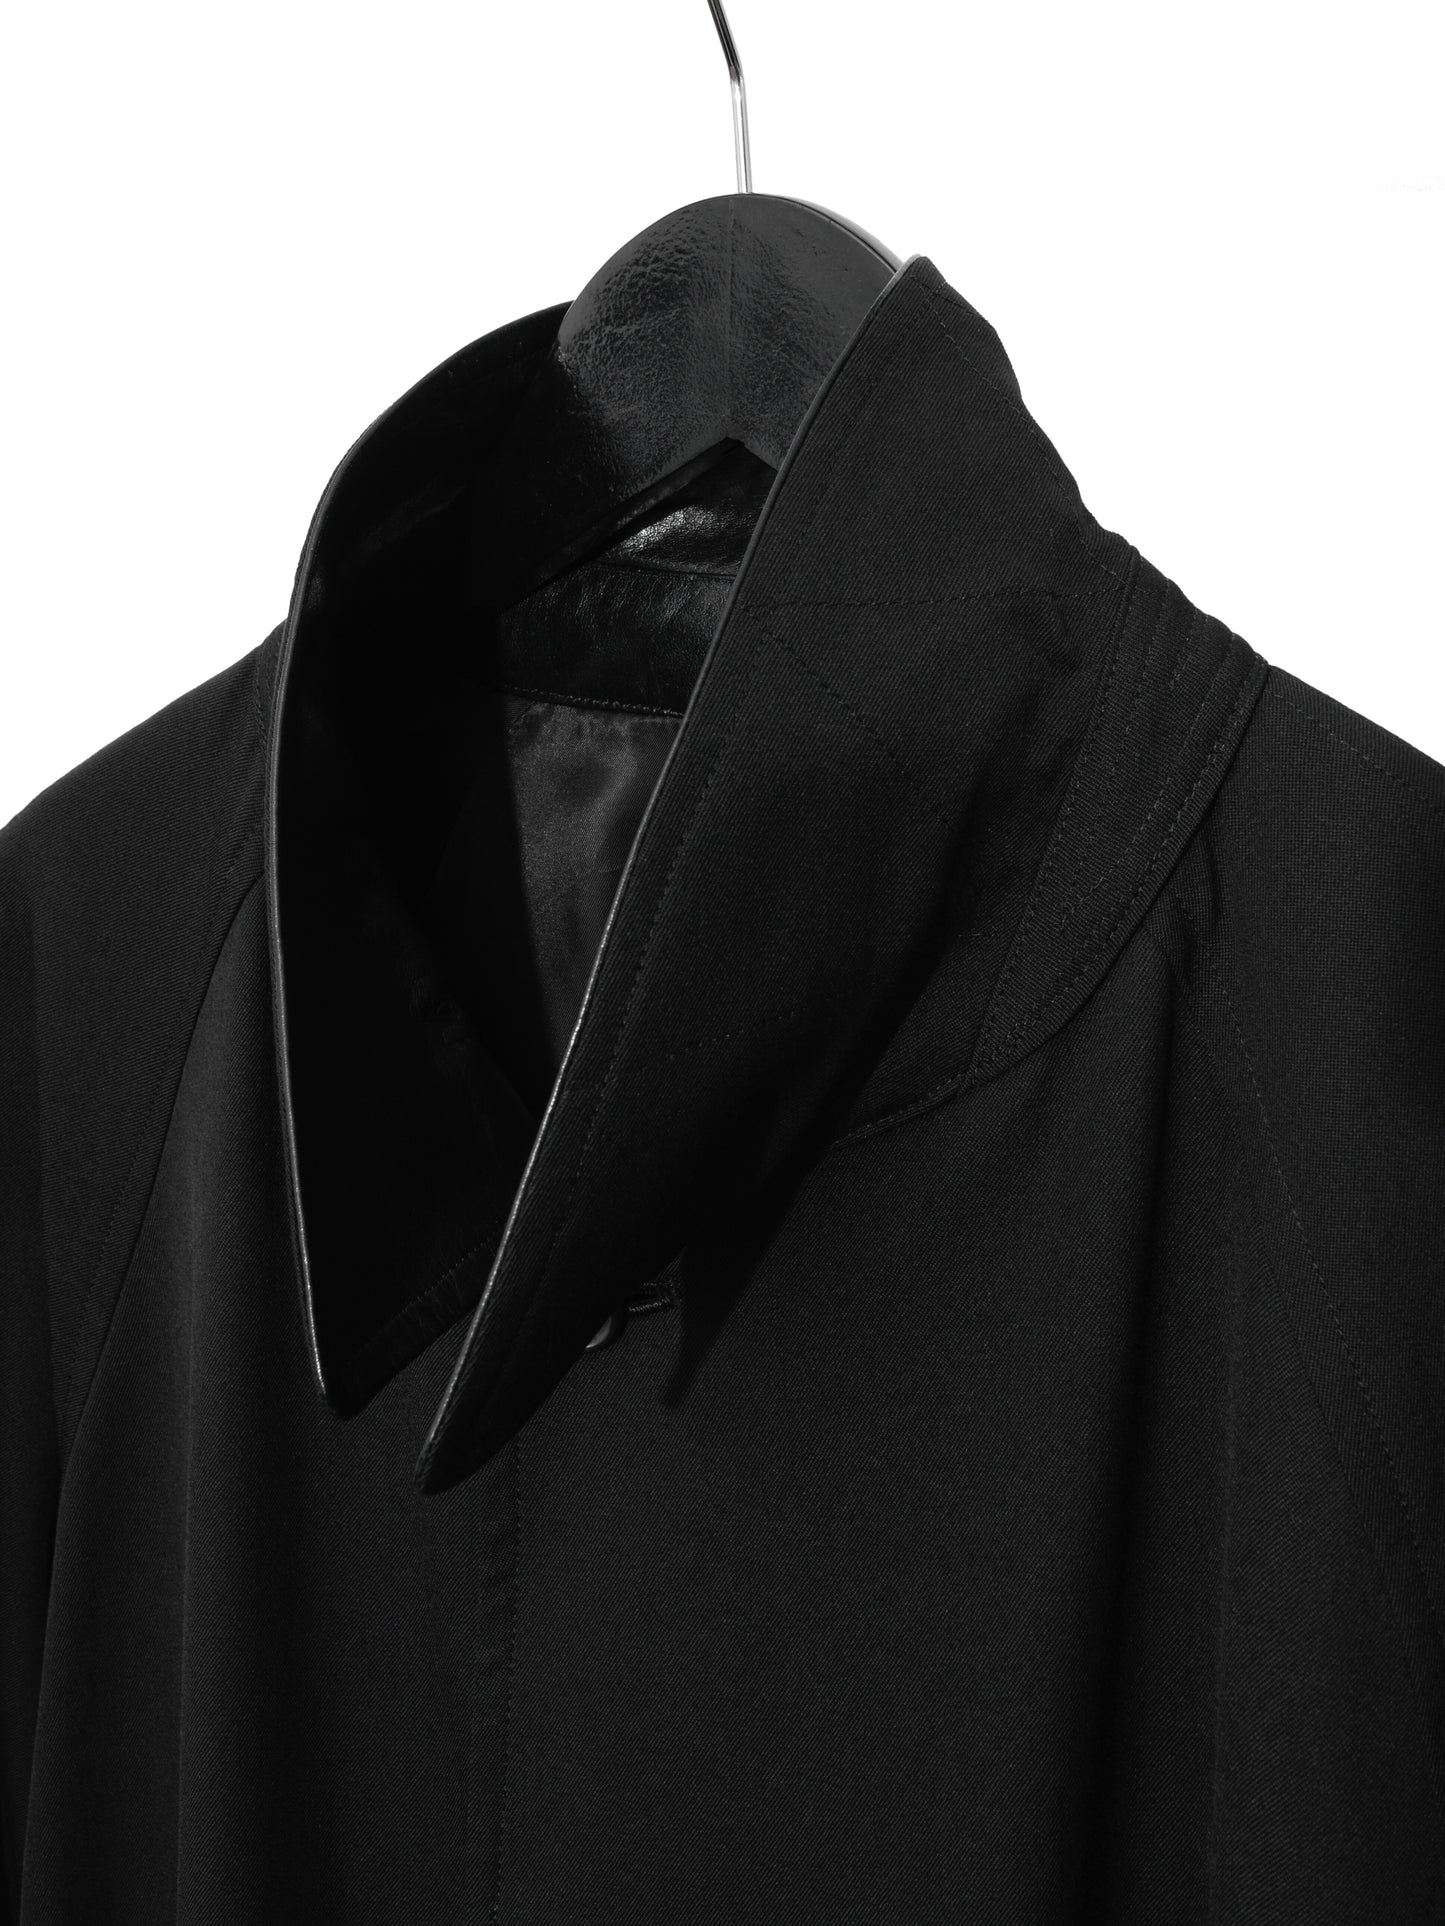 raglan mac coat black ∙ wool ∙ large